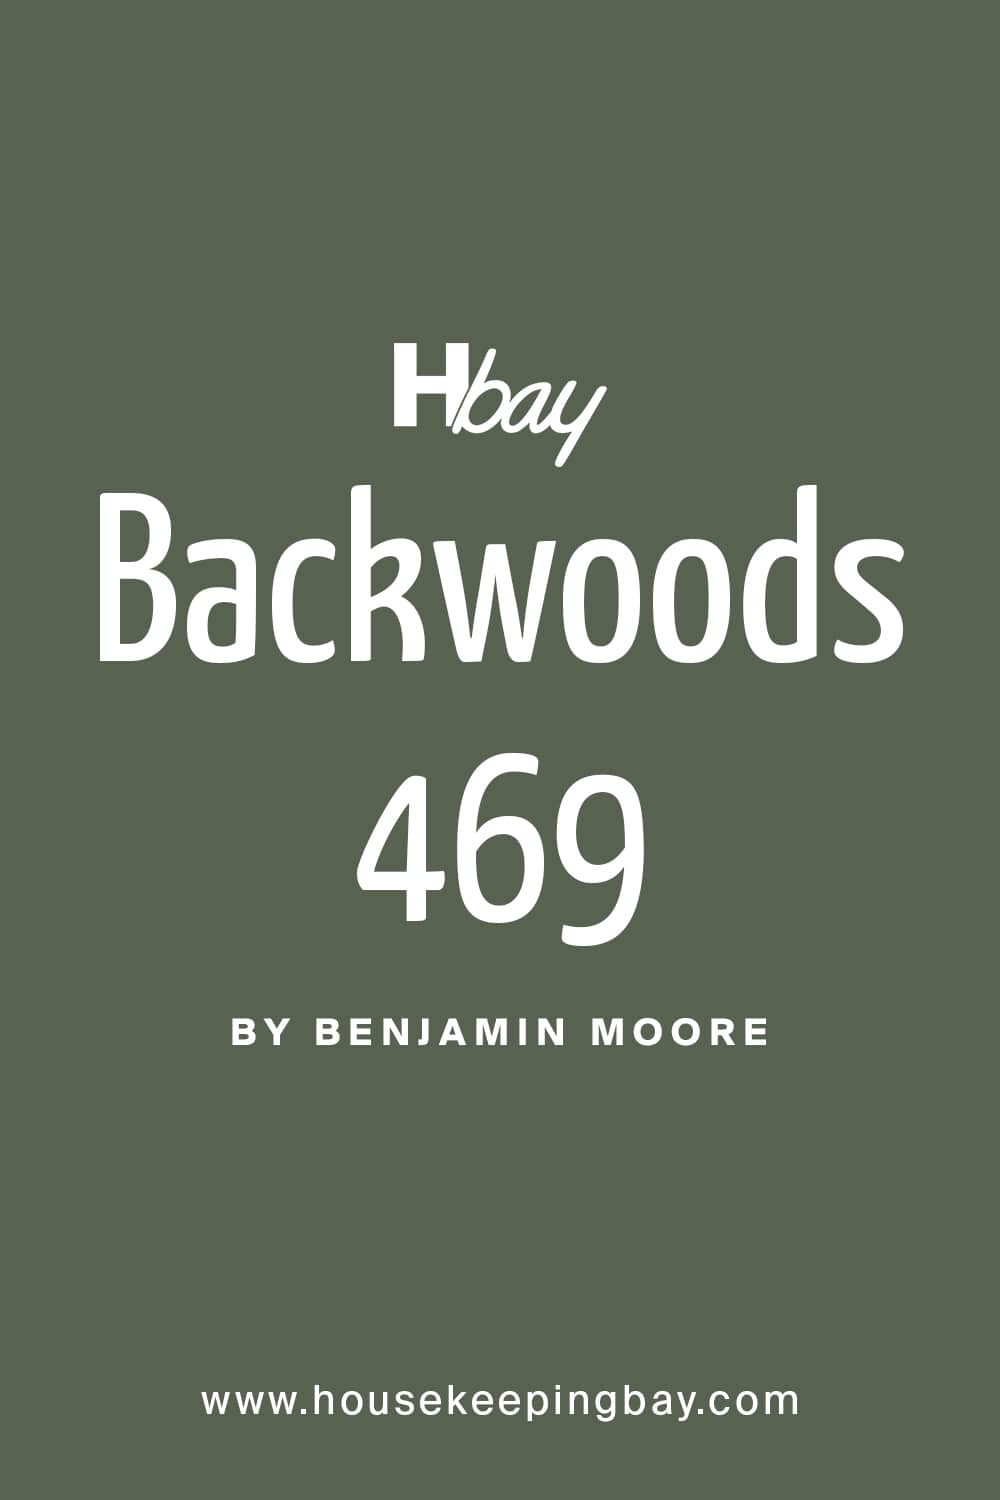 Backwoods 469 by Benjamin Moore